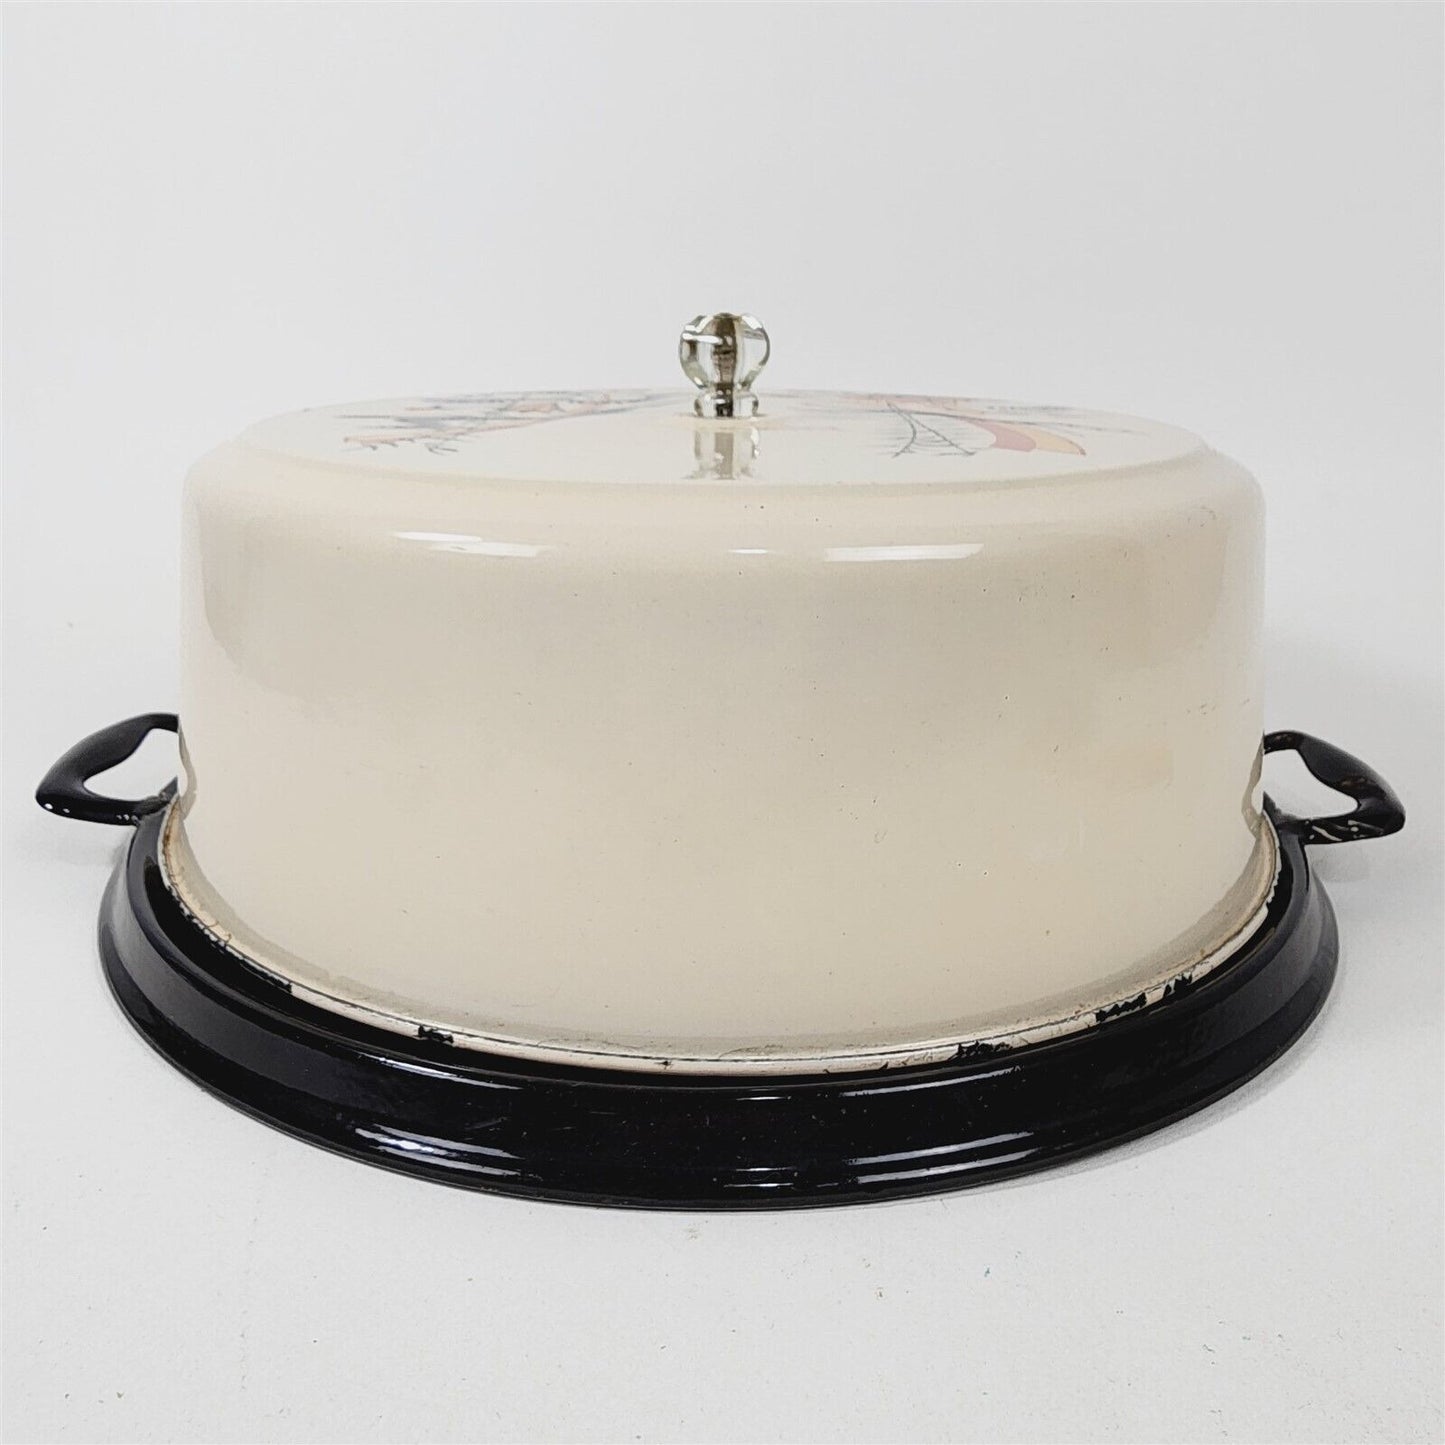 Vintage Art Deco Enamelware Covered Cake Platter Gazelle Chased by Dog